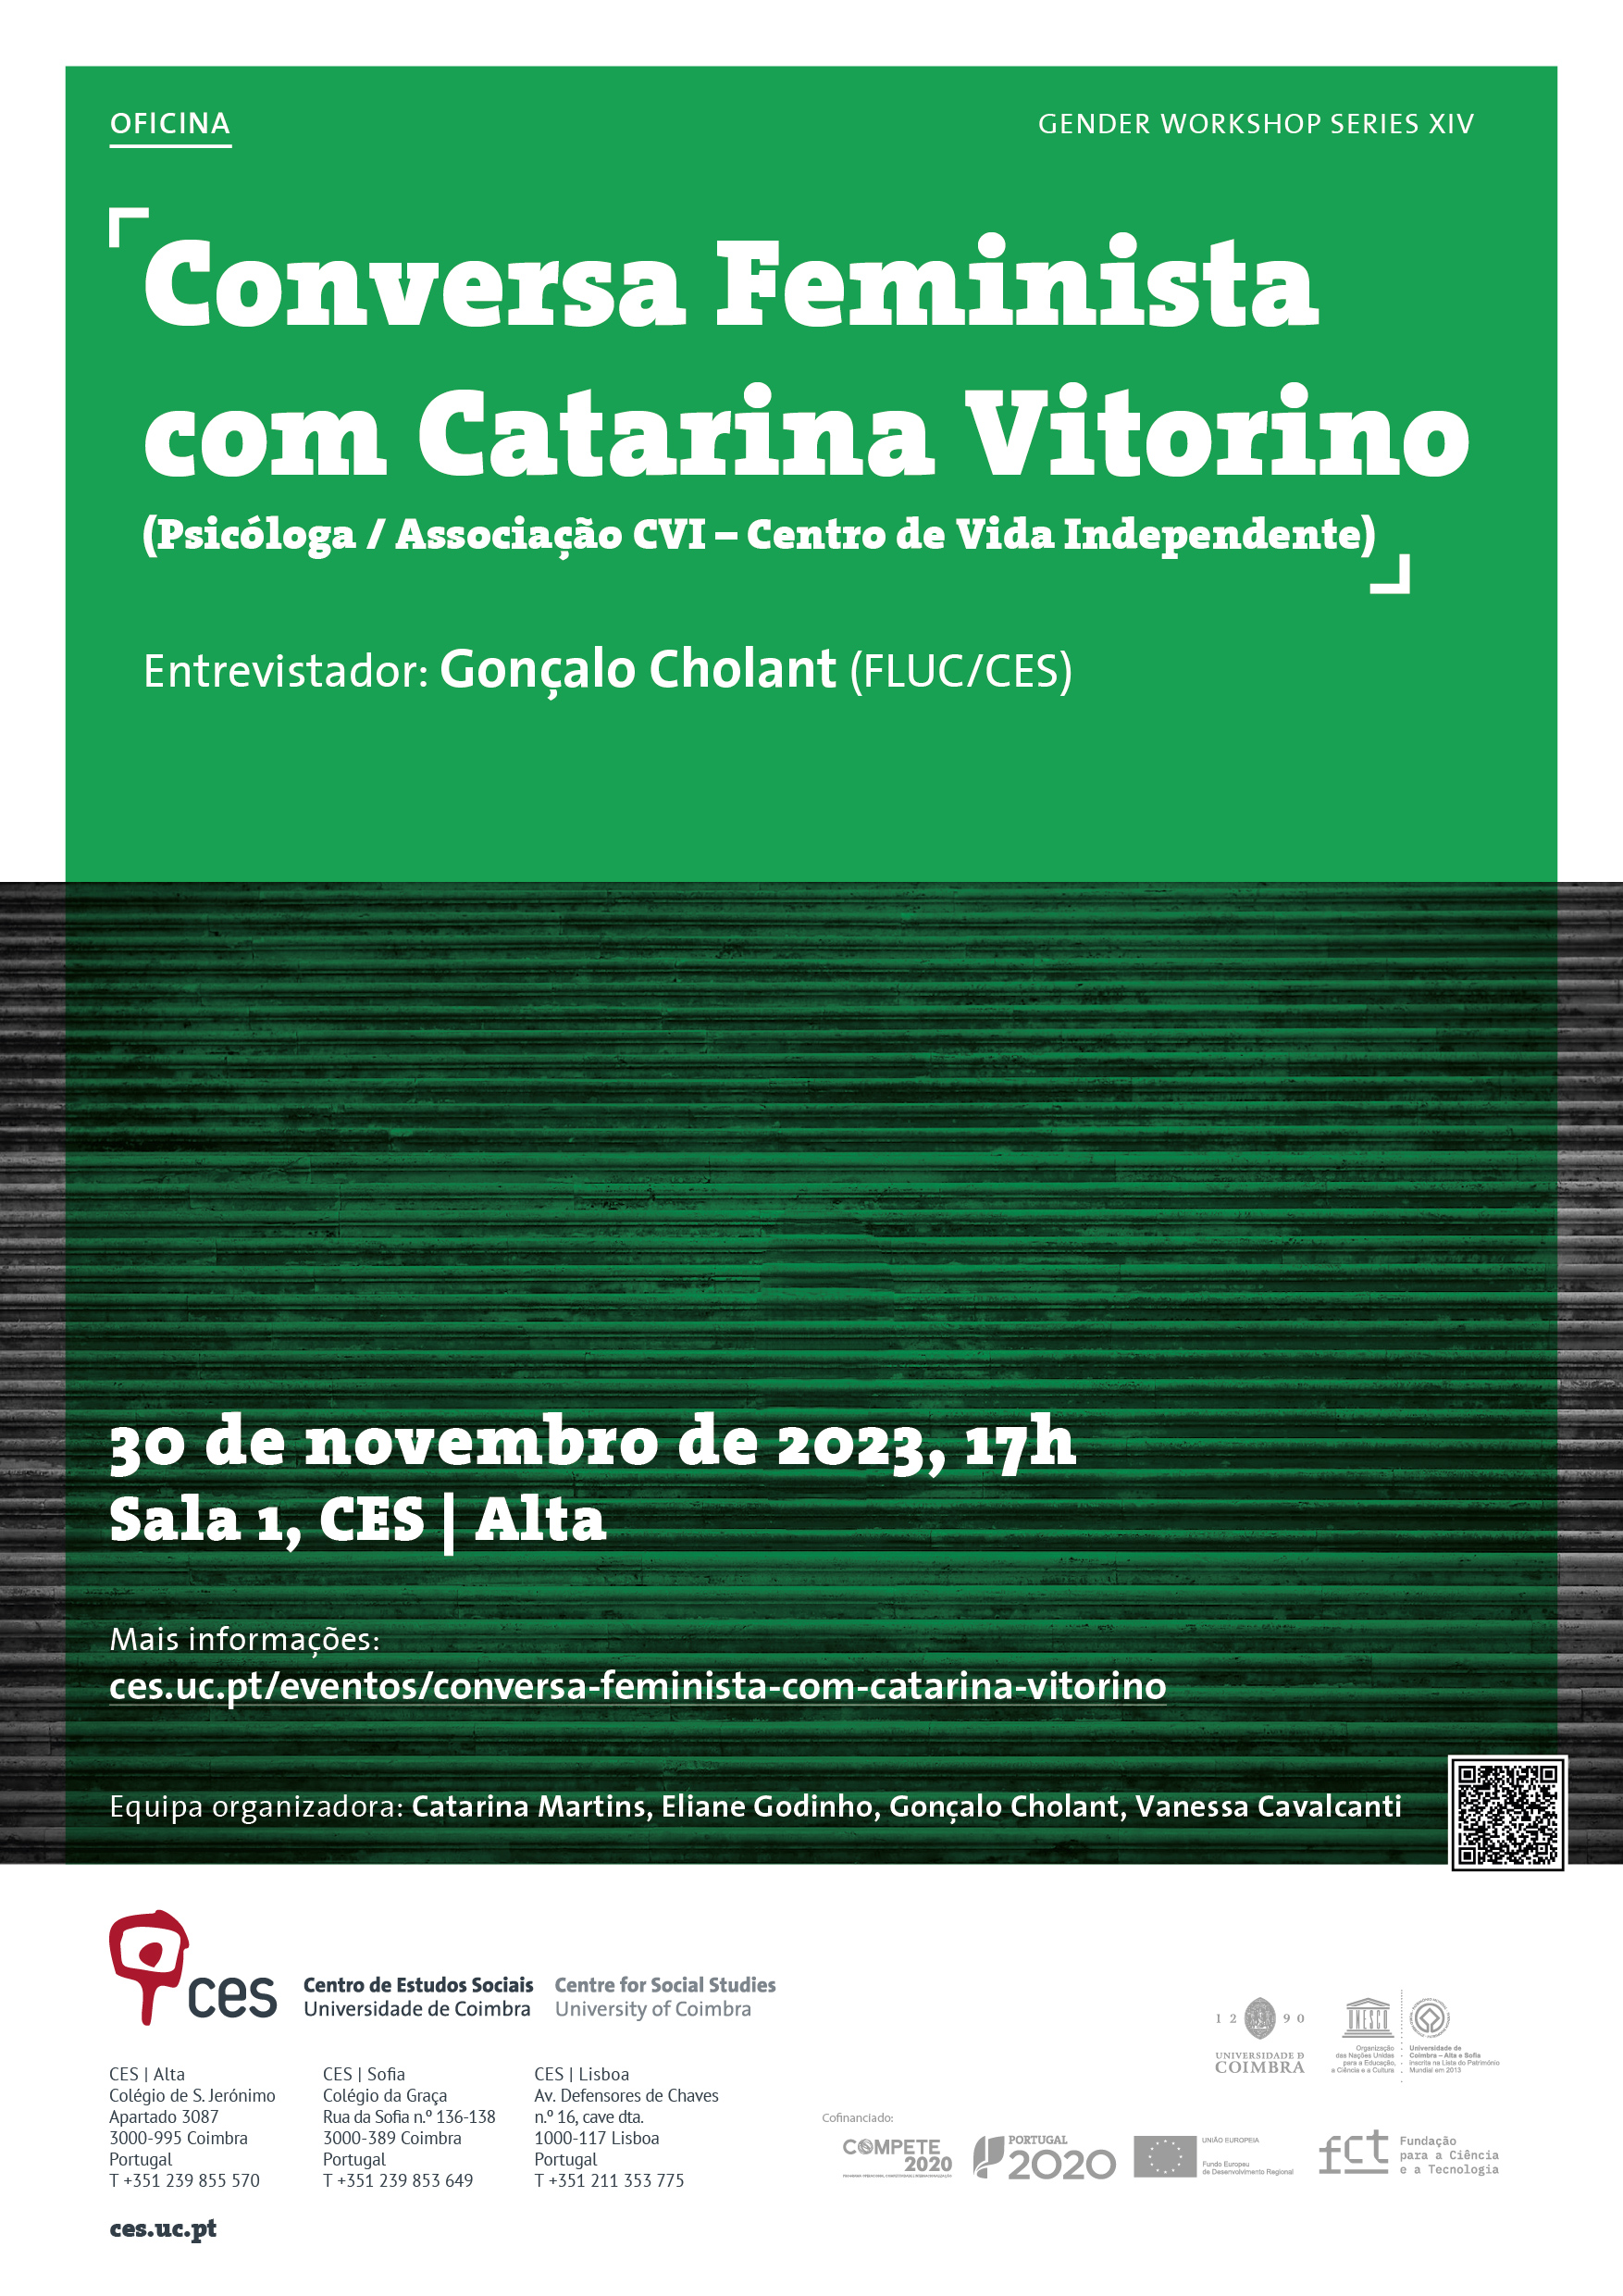 Feminist Talk with Catarina Vitorino<span id="edit_44280"><script>$(function() { $('#edit_44280').load( "/myces/user/editobj.php?tipo=evento&id=44280" ); });</script></span>